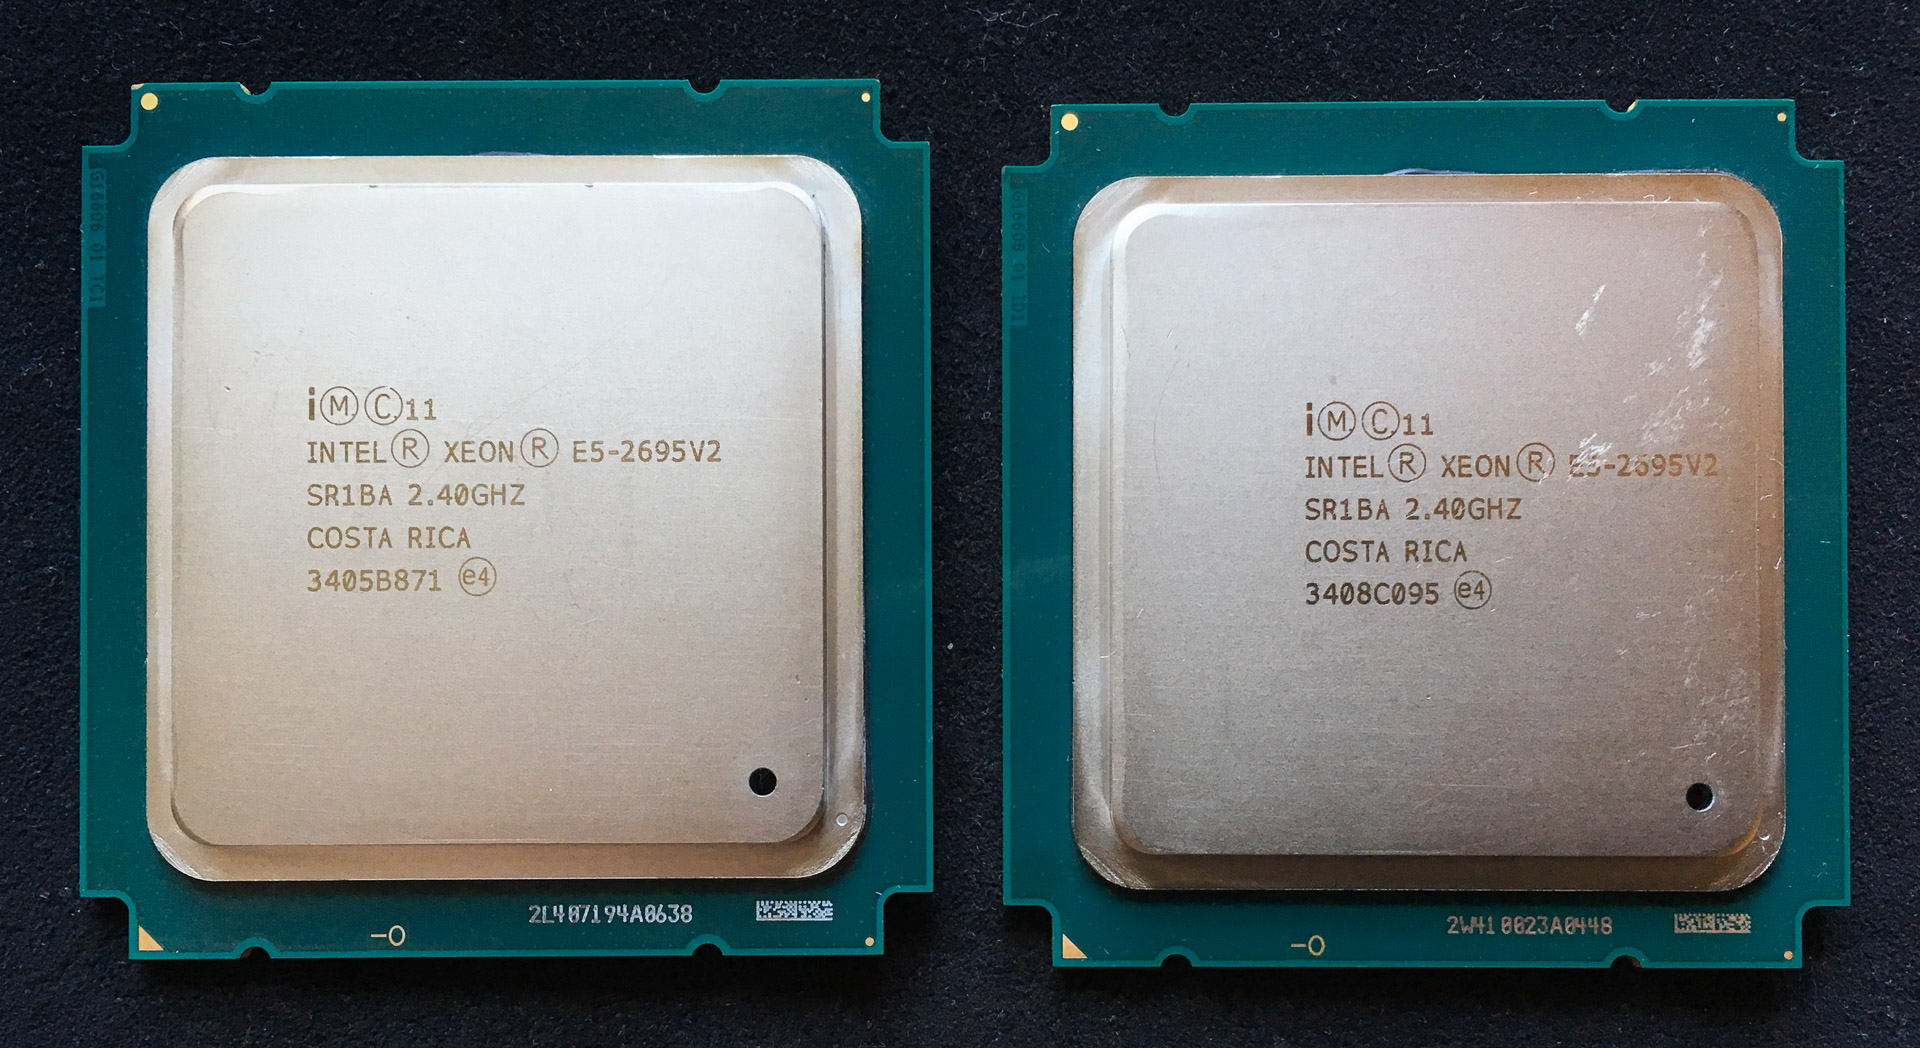 Intel xeon e5 lga 2011 3. Intel Xeon e5-2695v2. Процессор Intel Xeon e5-2695v2 lga2011. E5-2695 v2. Intel Xeon e5 2011 v2.